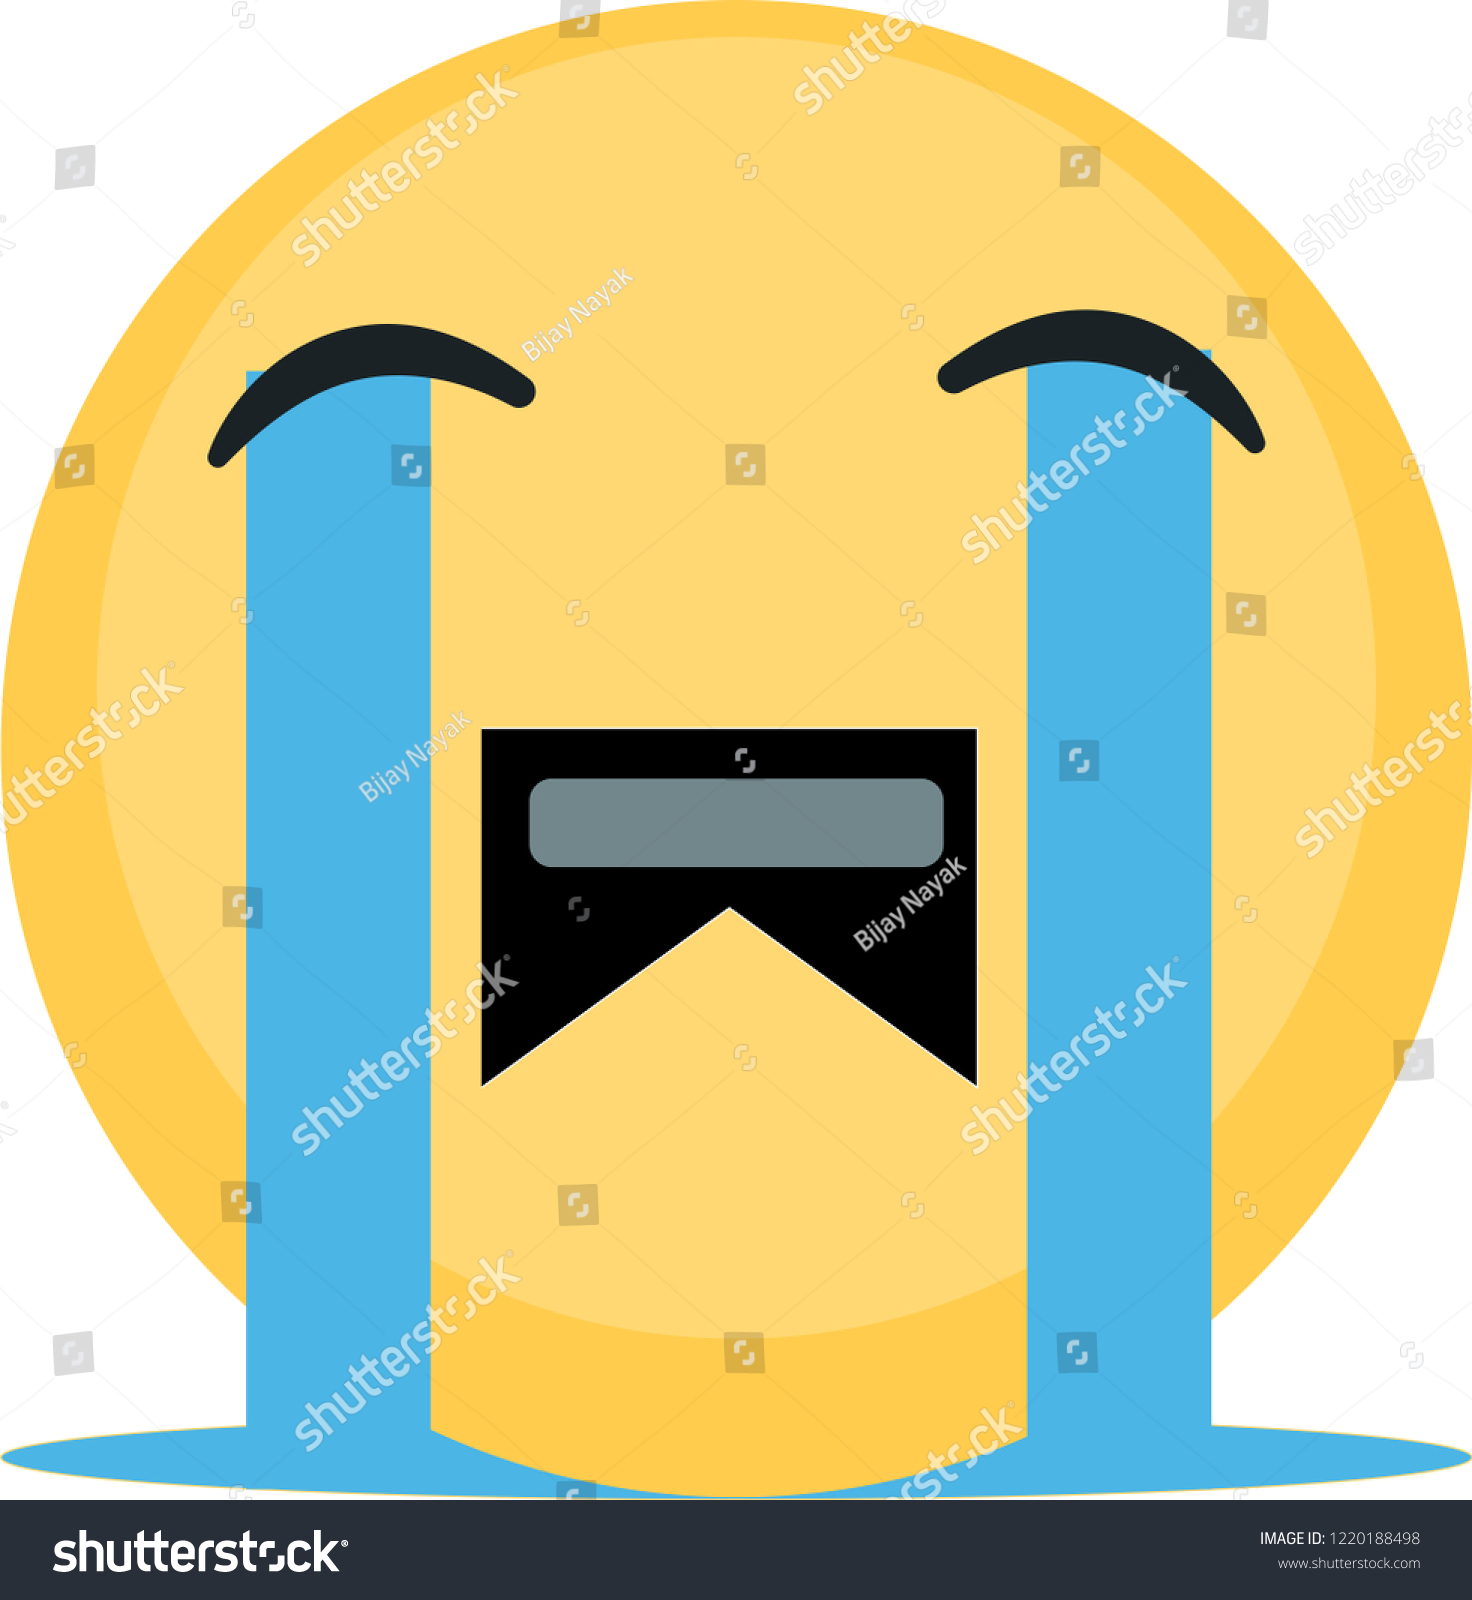 Sad Crying Face Emoji Stock Vector (Royalty Free) 1220188498 | Shutterstock